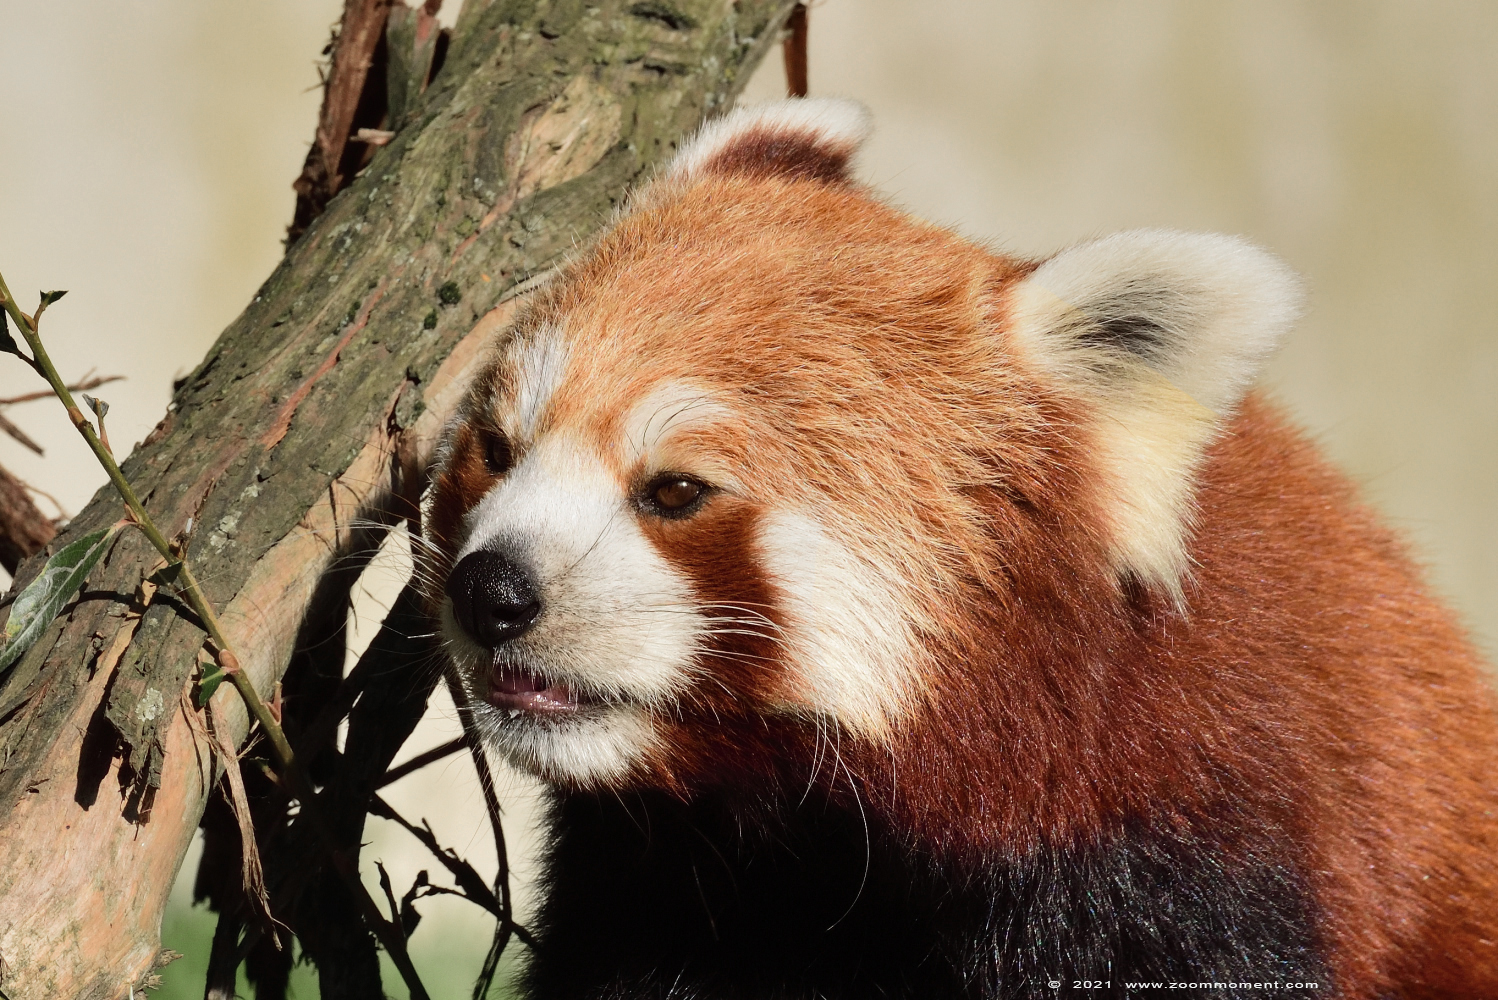 kleine of rode panda ( Ailurus fulgens ) lesser or red panda
Trefwoorden: Planckendael Belgium kleine rode panda Ailurus fulgens lesser red panda